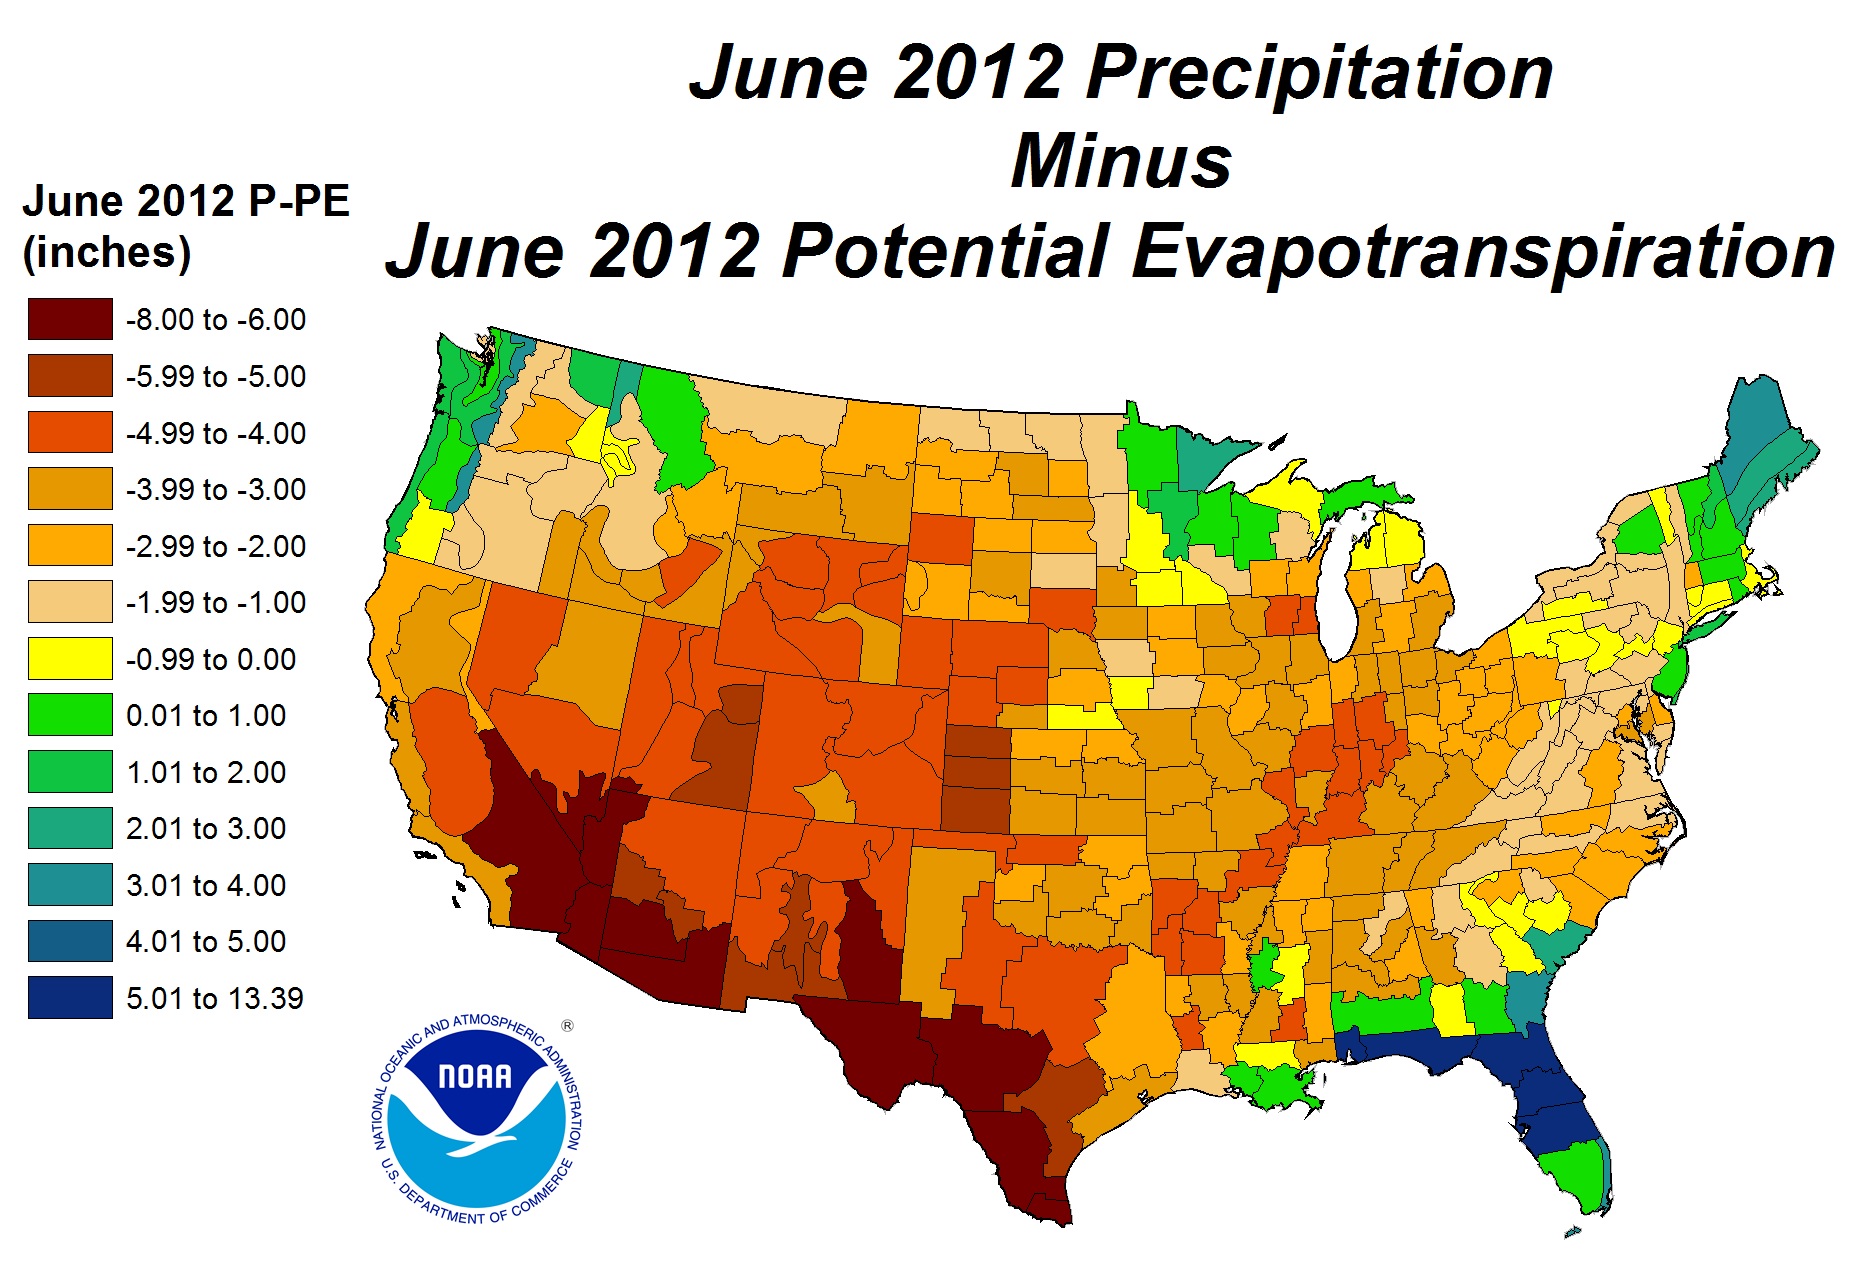 June 2012 Precipitation minus Potential Evapotranspiration map